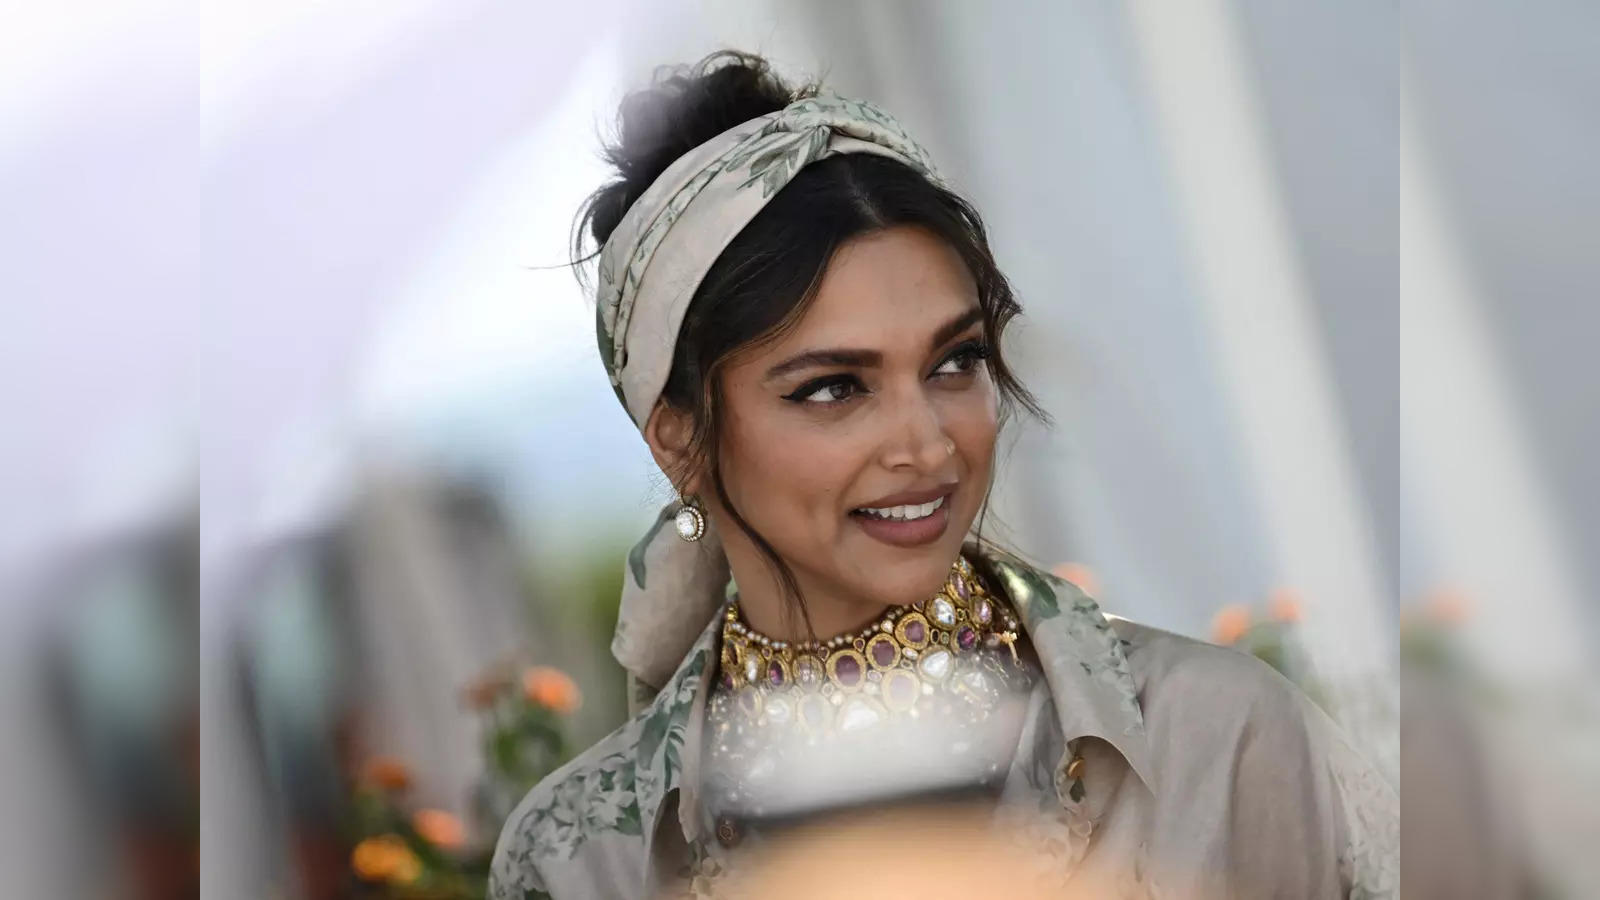 Deepika Padukone wore head-to-toe Louis Vuitton to debut fashion's